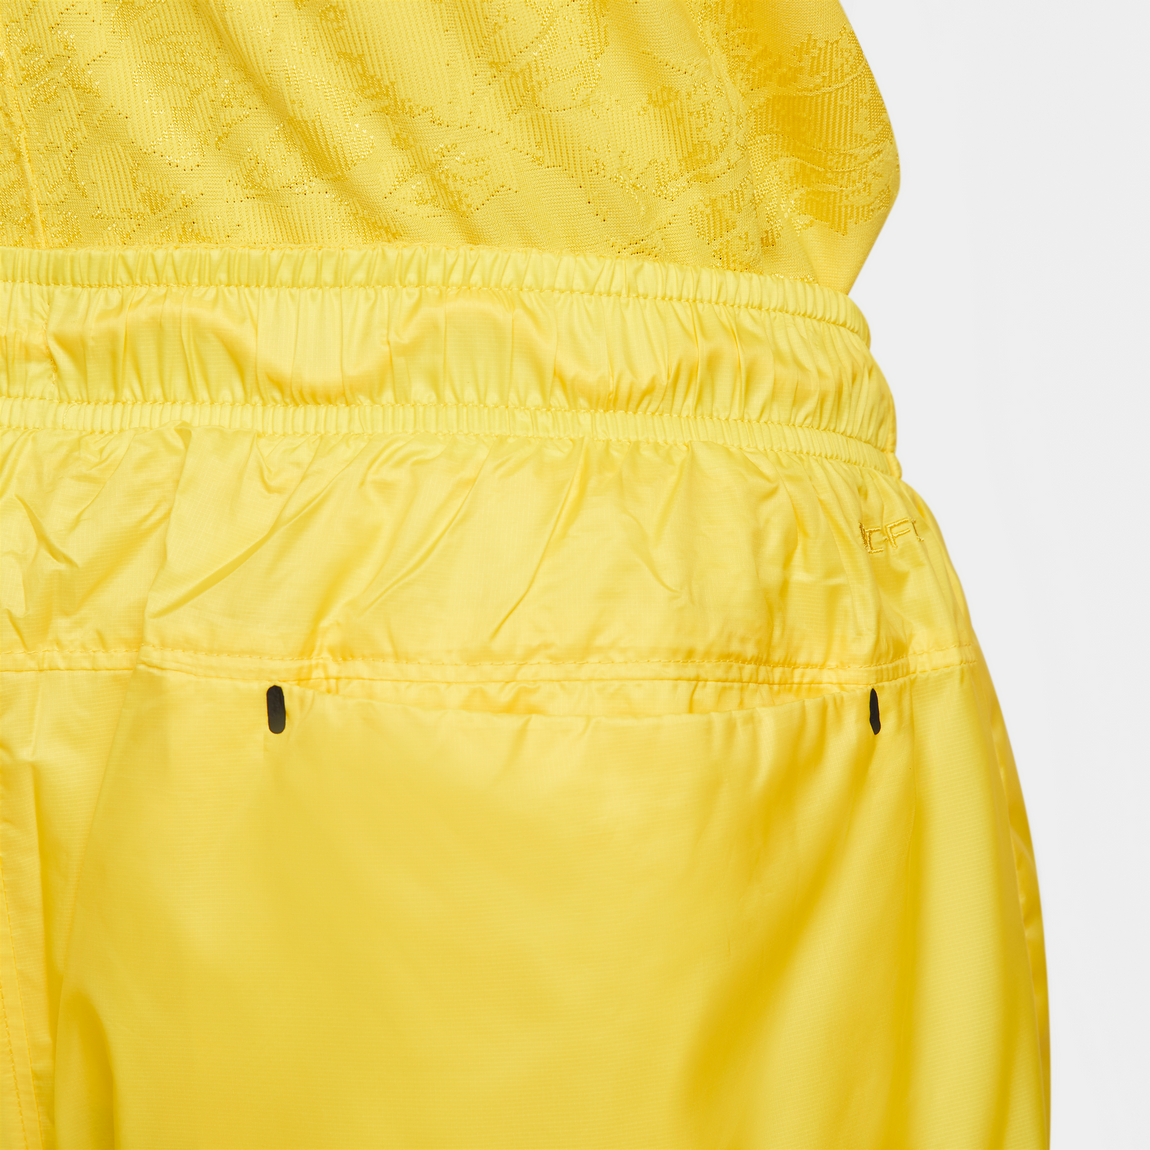 Nike Sportswear Tech Pack Woven Shorts (Tour Yellow/Black/Vivid Sulfur) - Nike Sportswear Tech Pack Woven Shorts (Tour Yellow/Black/Vivid Sulfur) - 